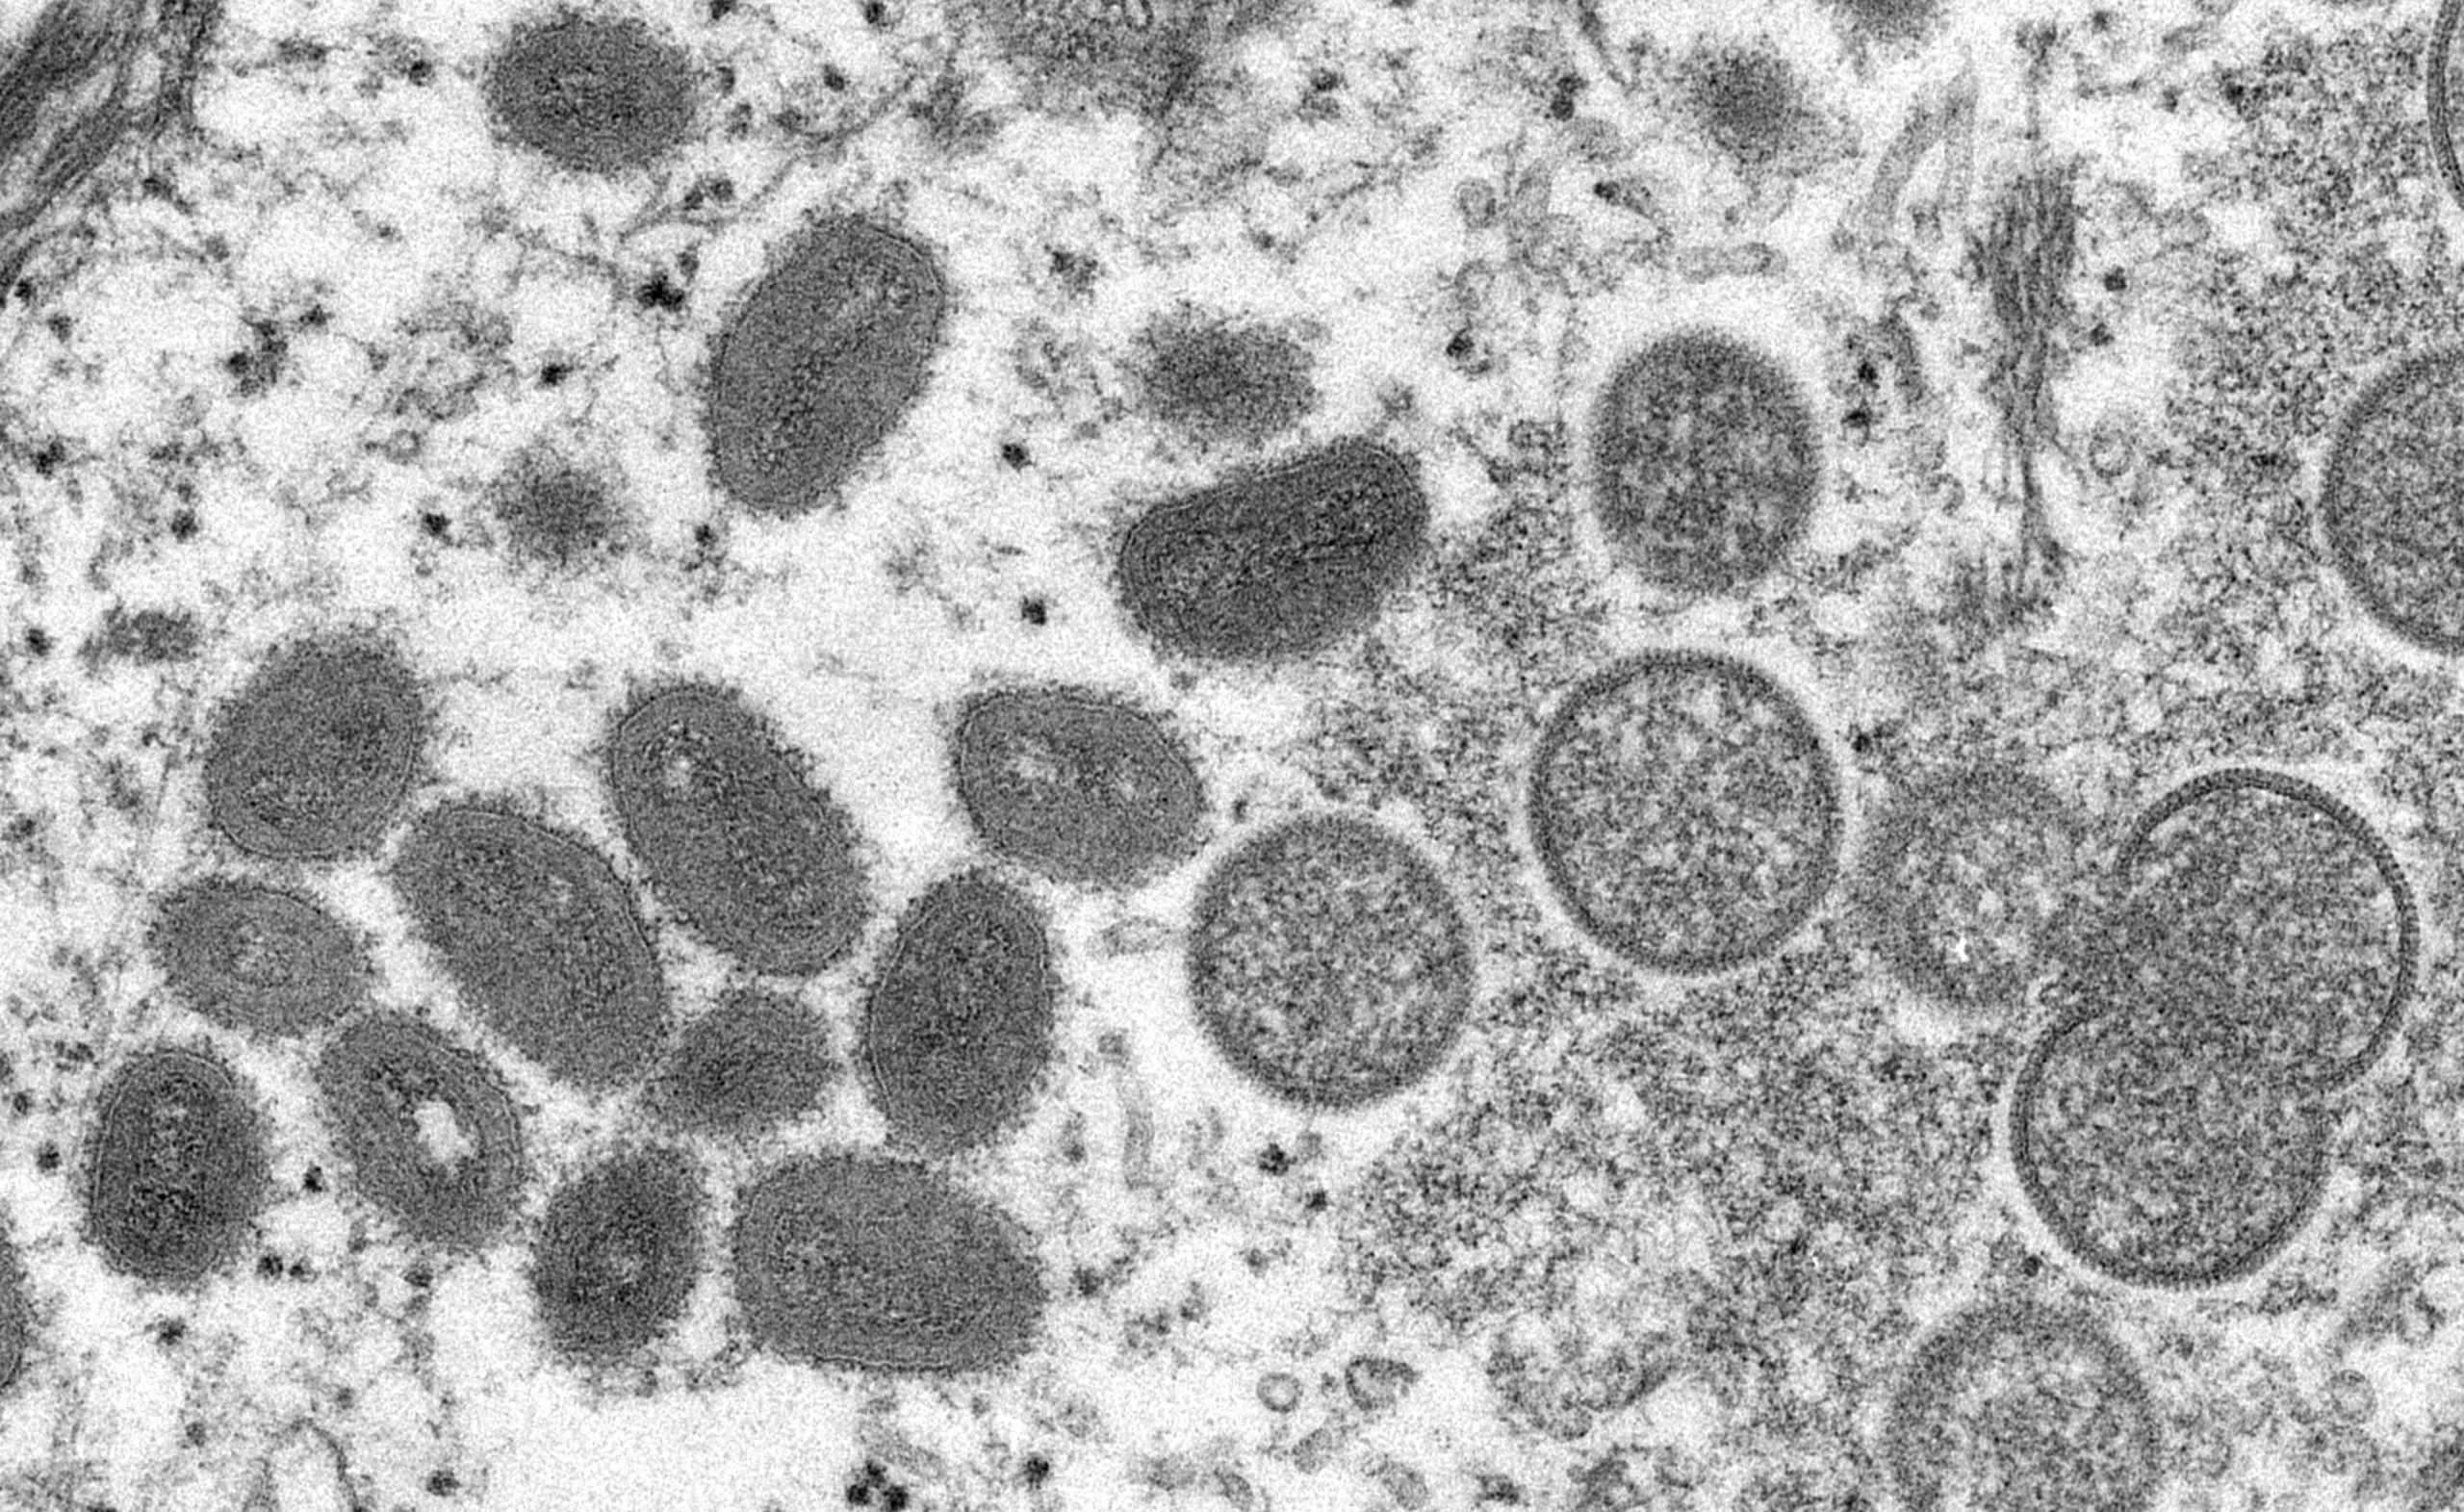 Bahrain reports first case of monkeypox virus